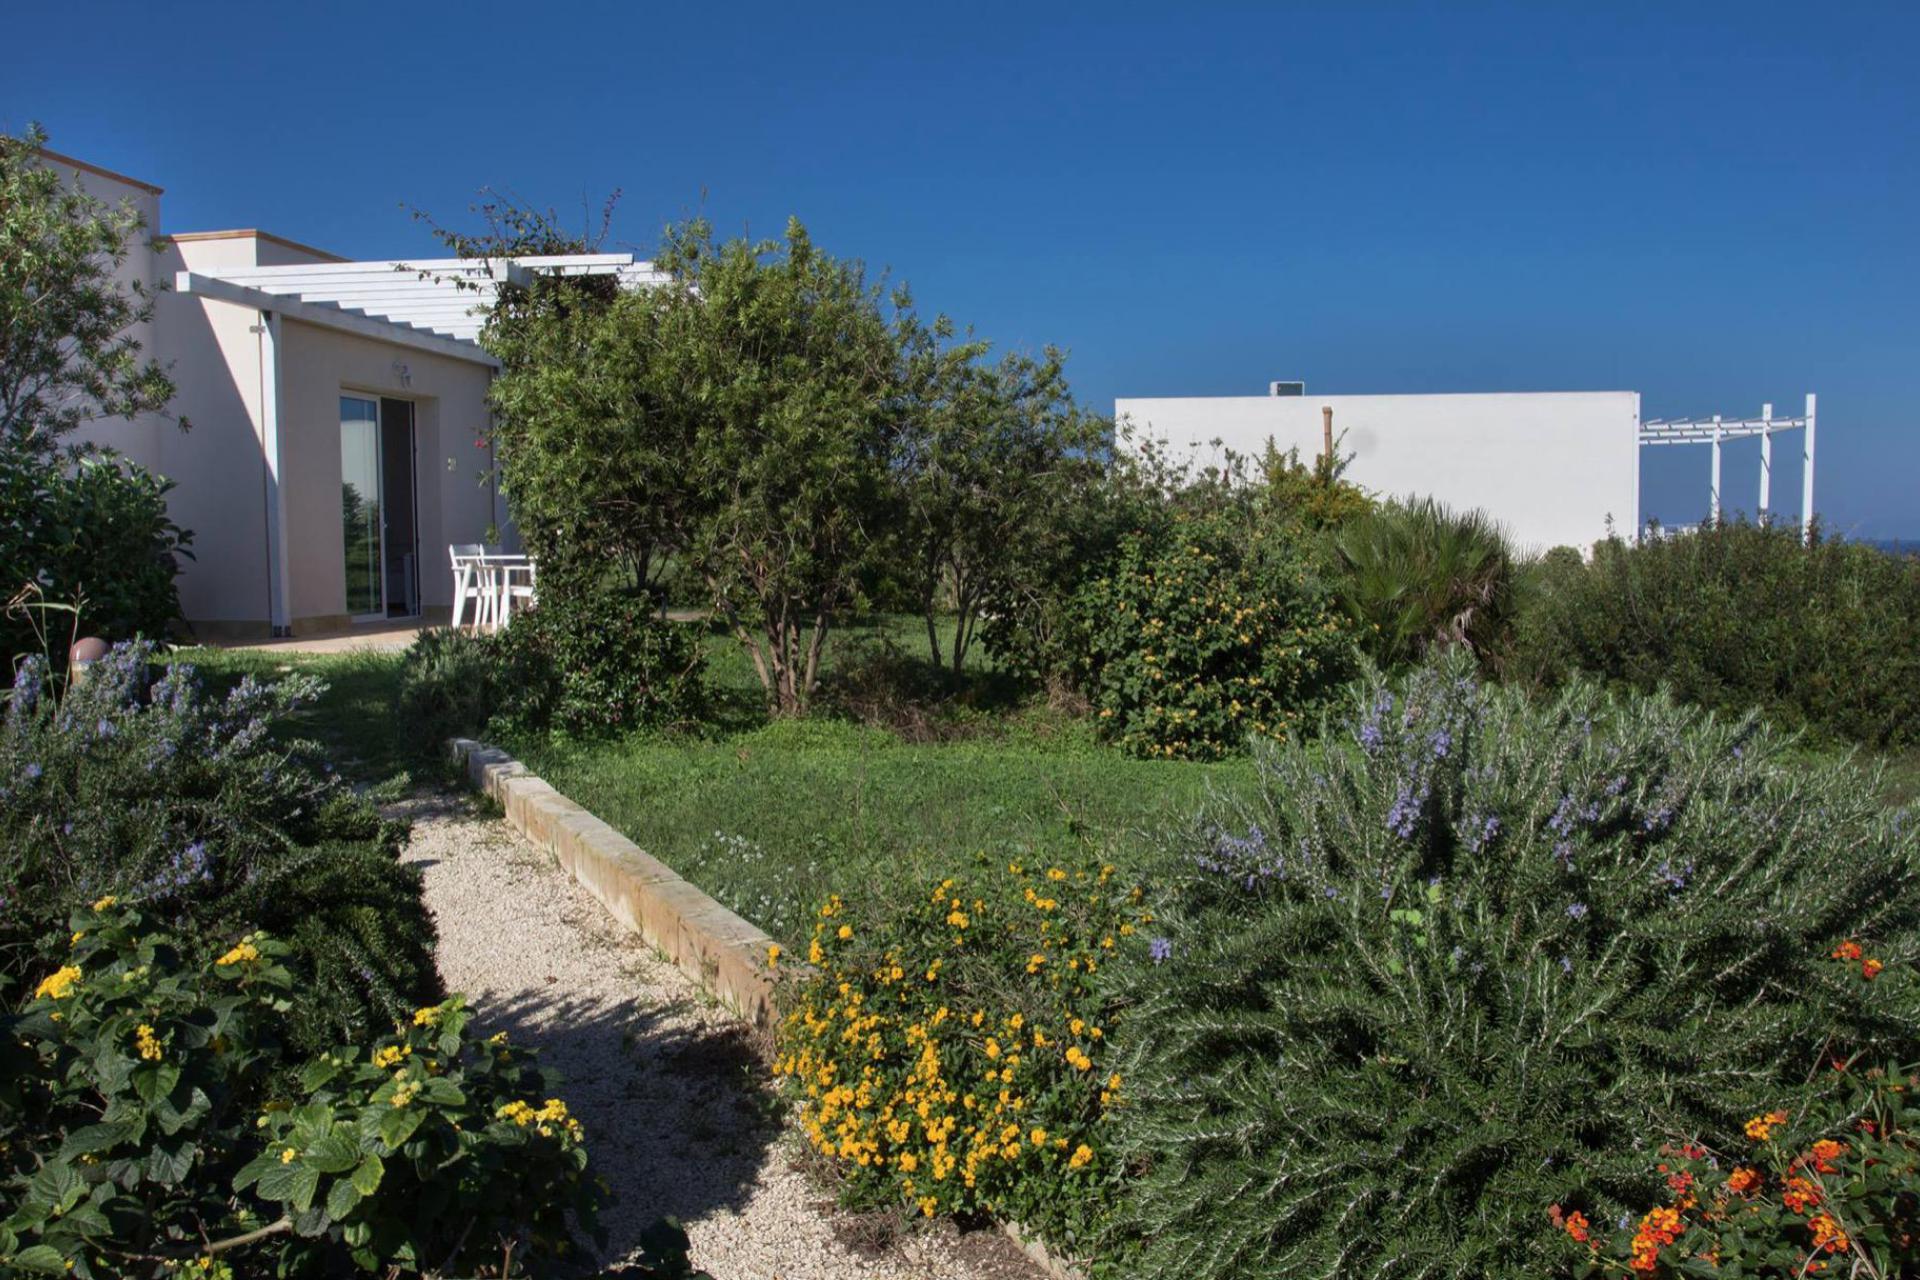 Agriturismo Sicilie Cottages op prachtige plek aan zee vlakbij Siracusa